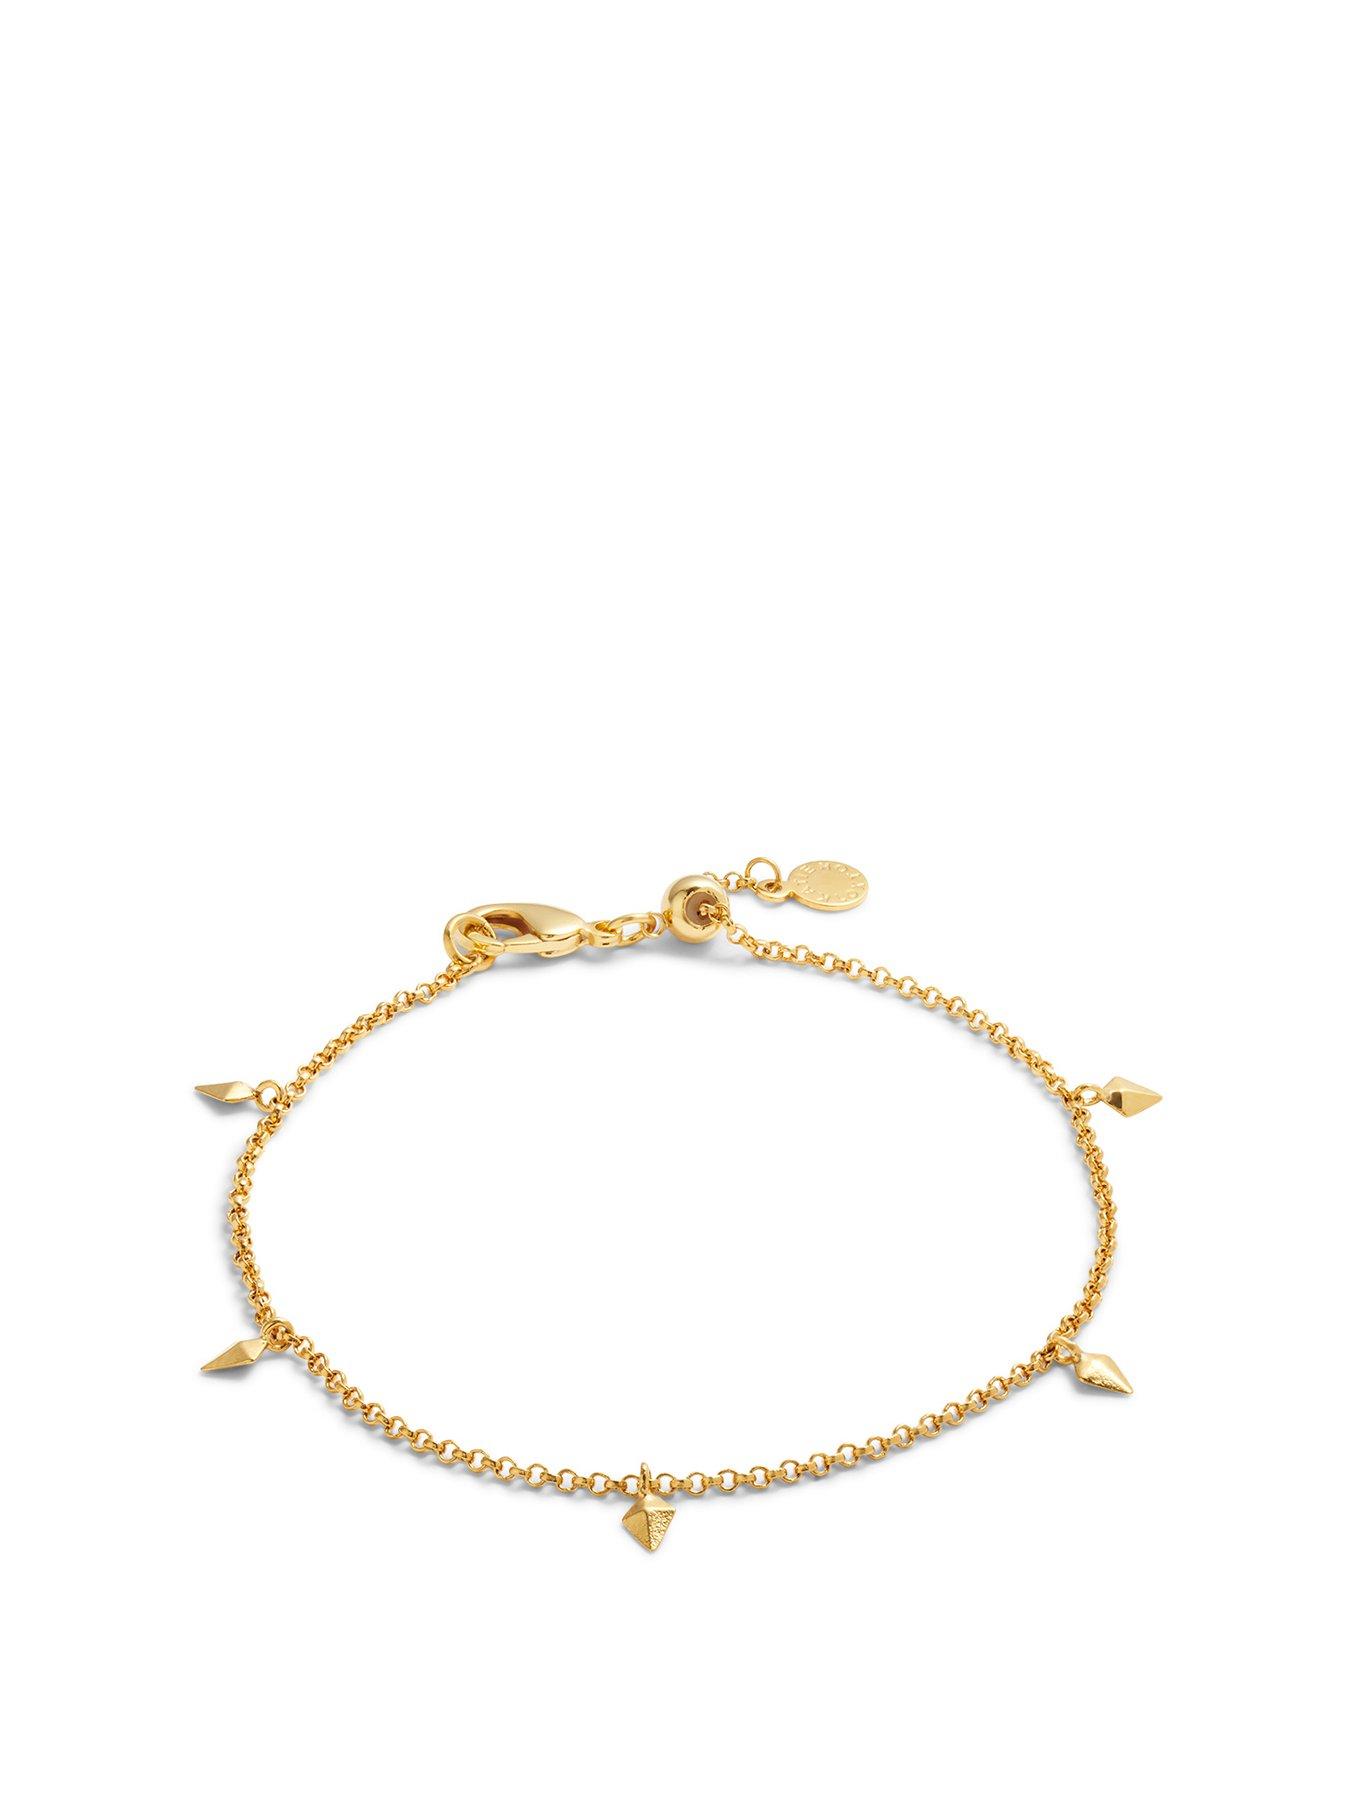 Product photograph of Katie Loxton Estee Bracelet Gold Bracelet 19cm Total Length from very.co.uk